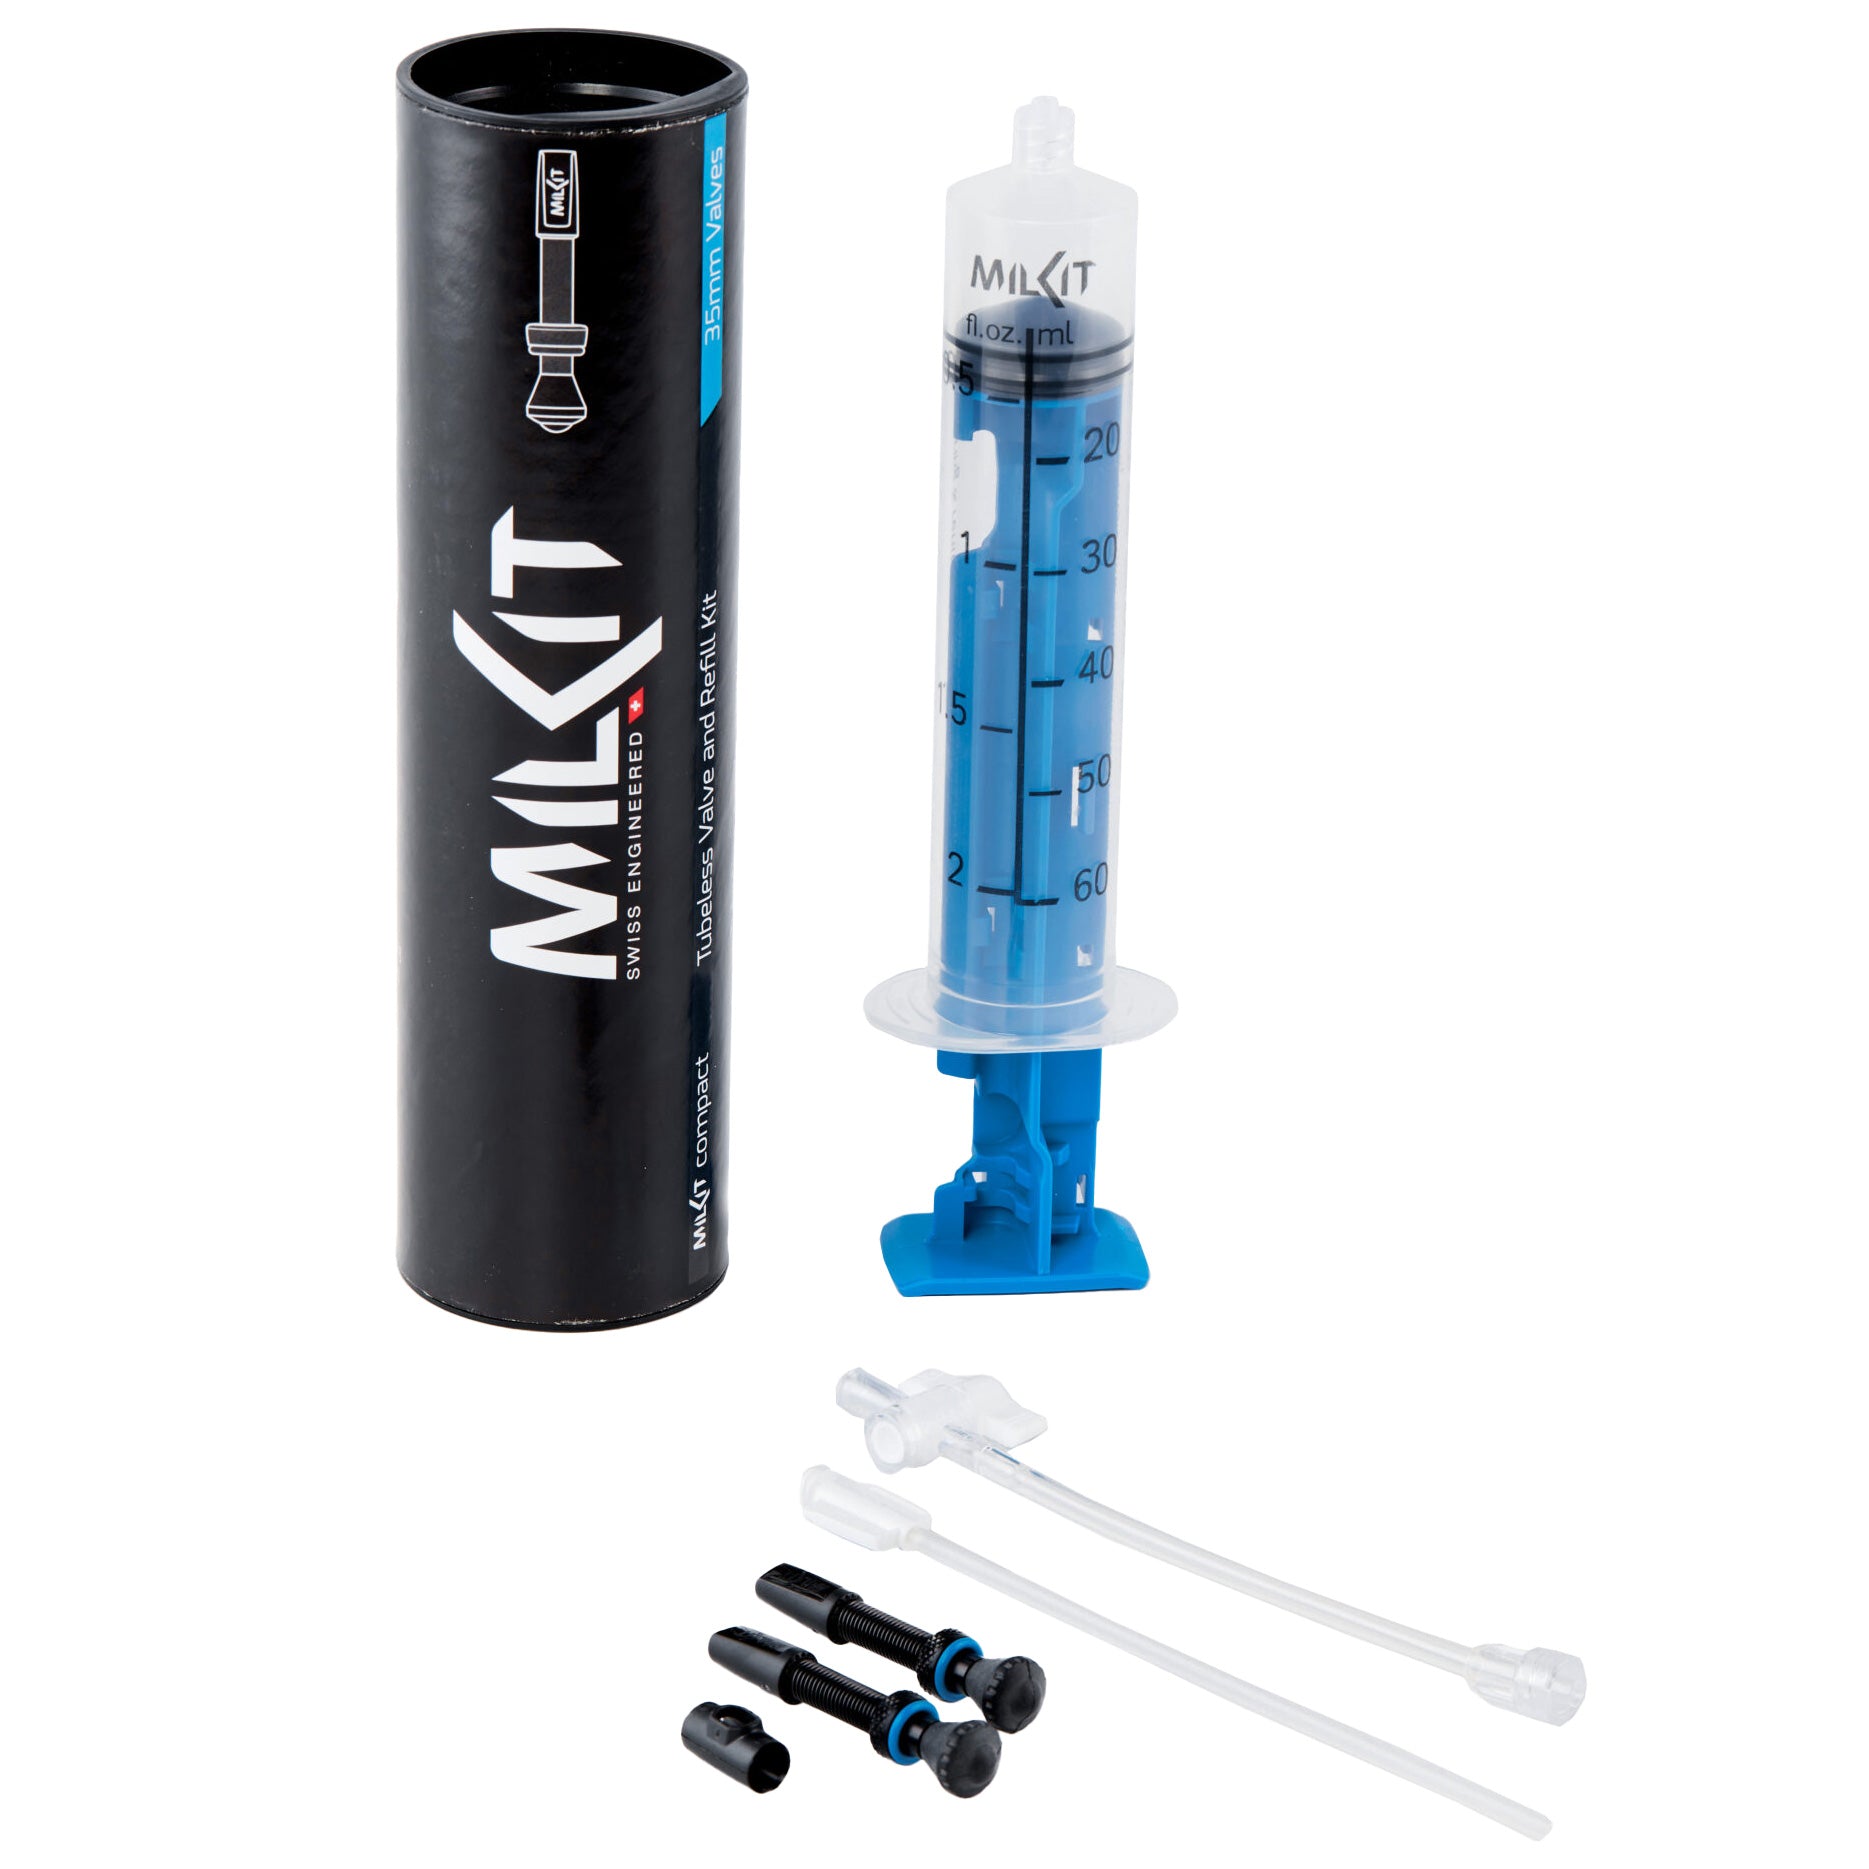 MilKit Compact Tubeless Valve and Applicator Kit - 35mm